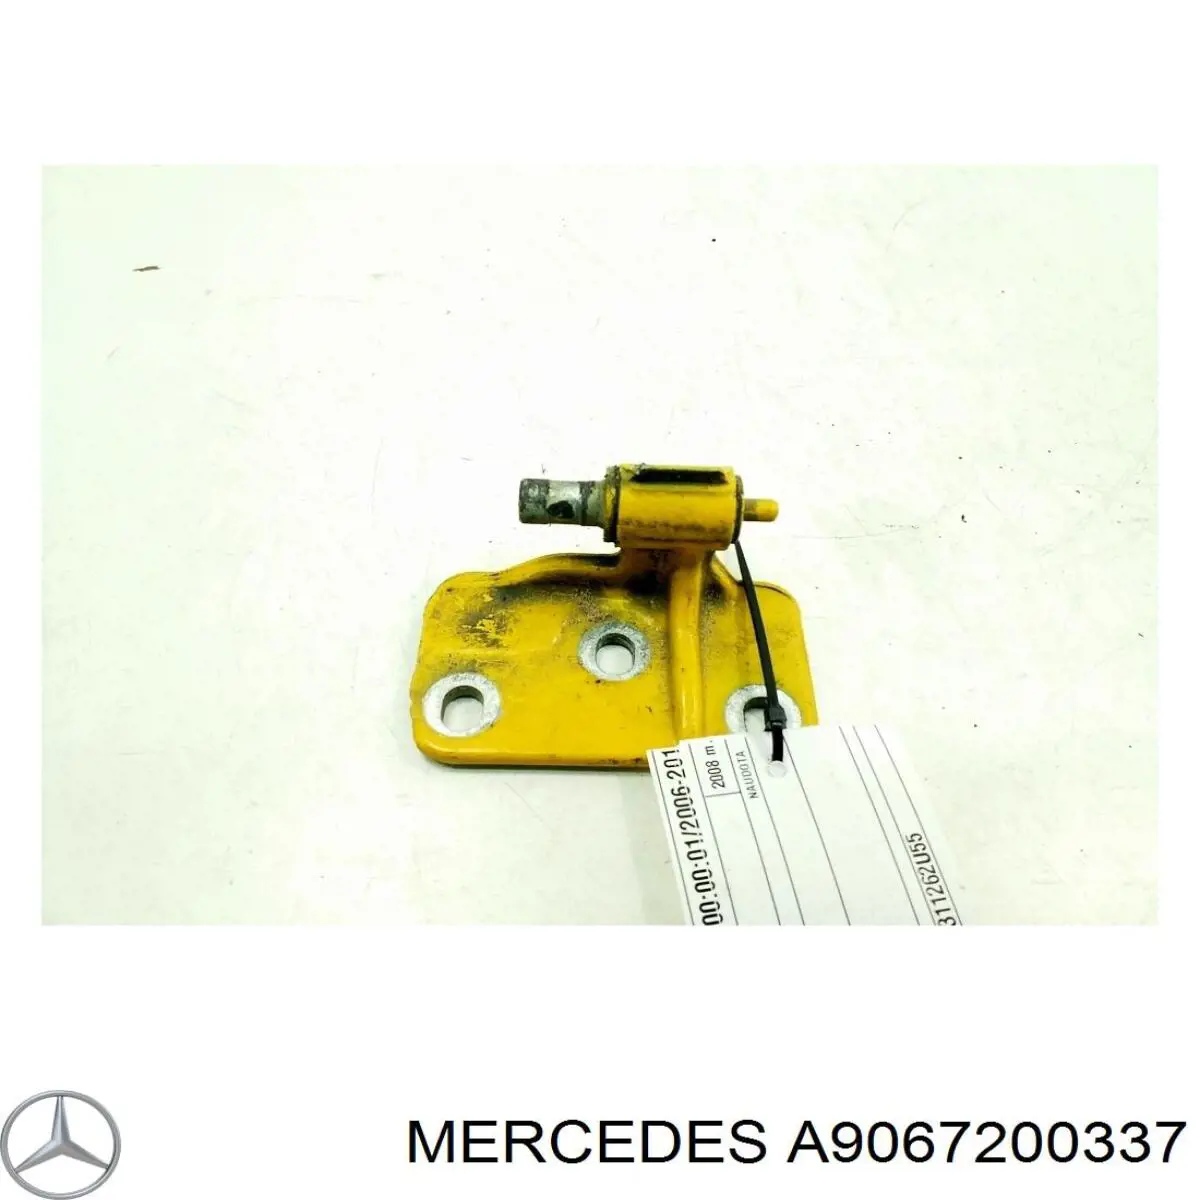 A9067200337 Mercedes bisagra de puerta delantera derecha